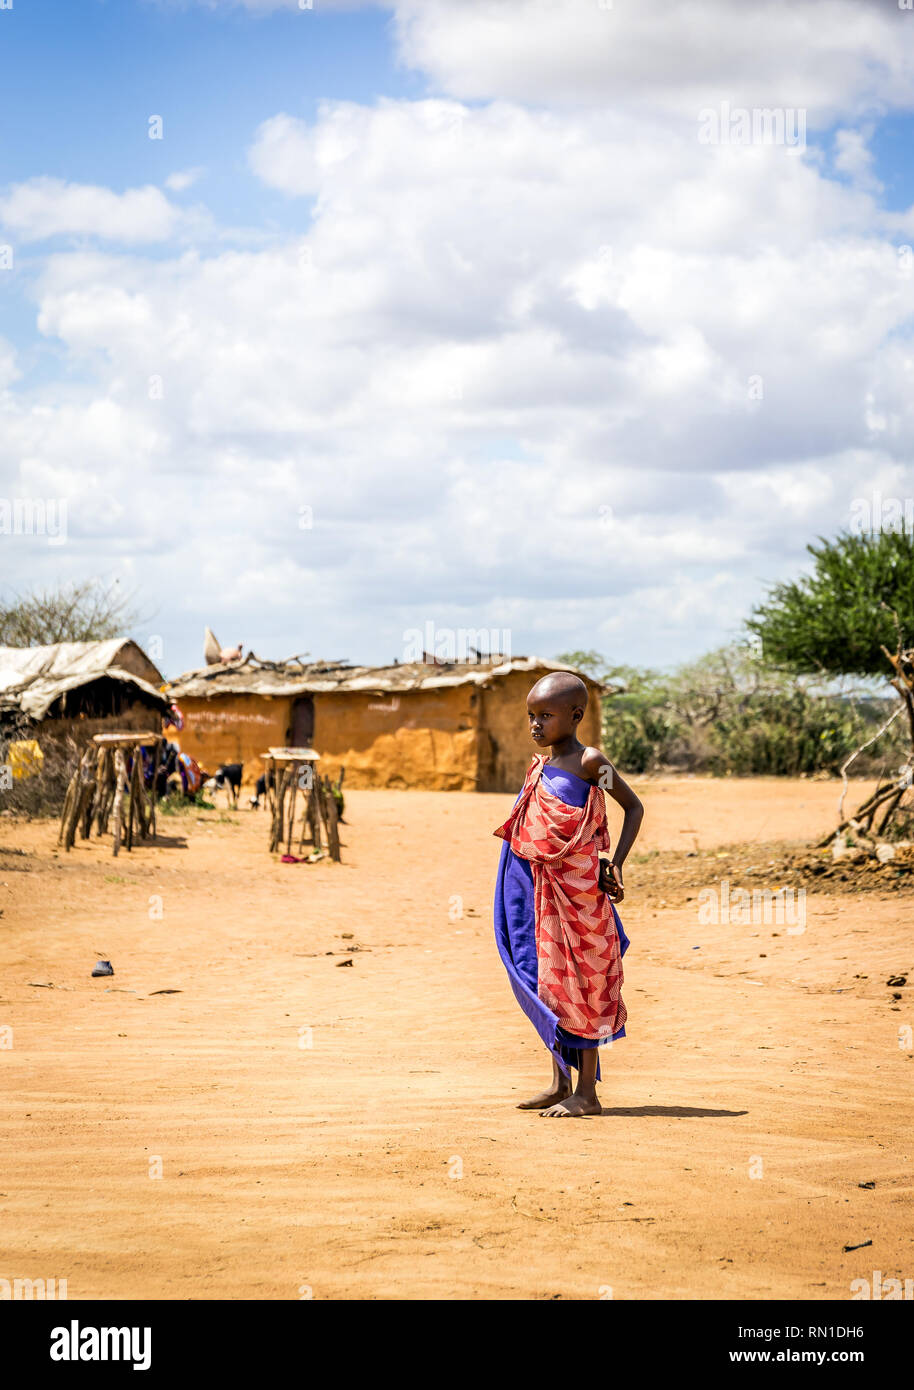 VILLAGE MASAI, KENYA - 11 octobre 2018 : Unindentified enfant africain portant des vêtements traditionnels en tribu Masai, Kenya Banque D'Images